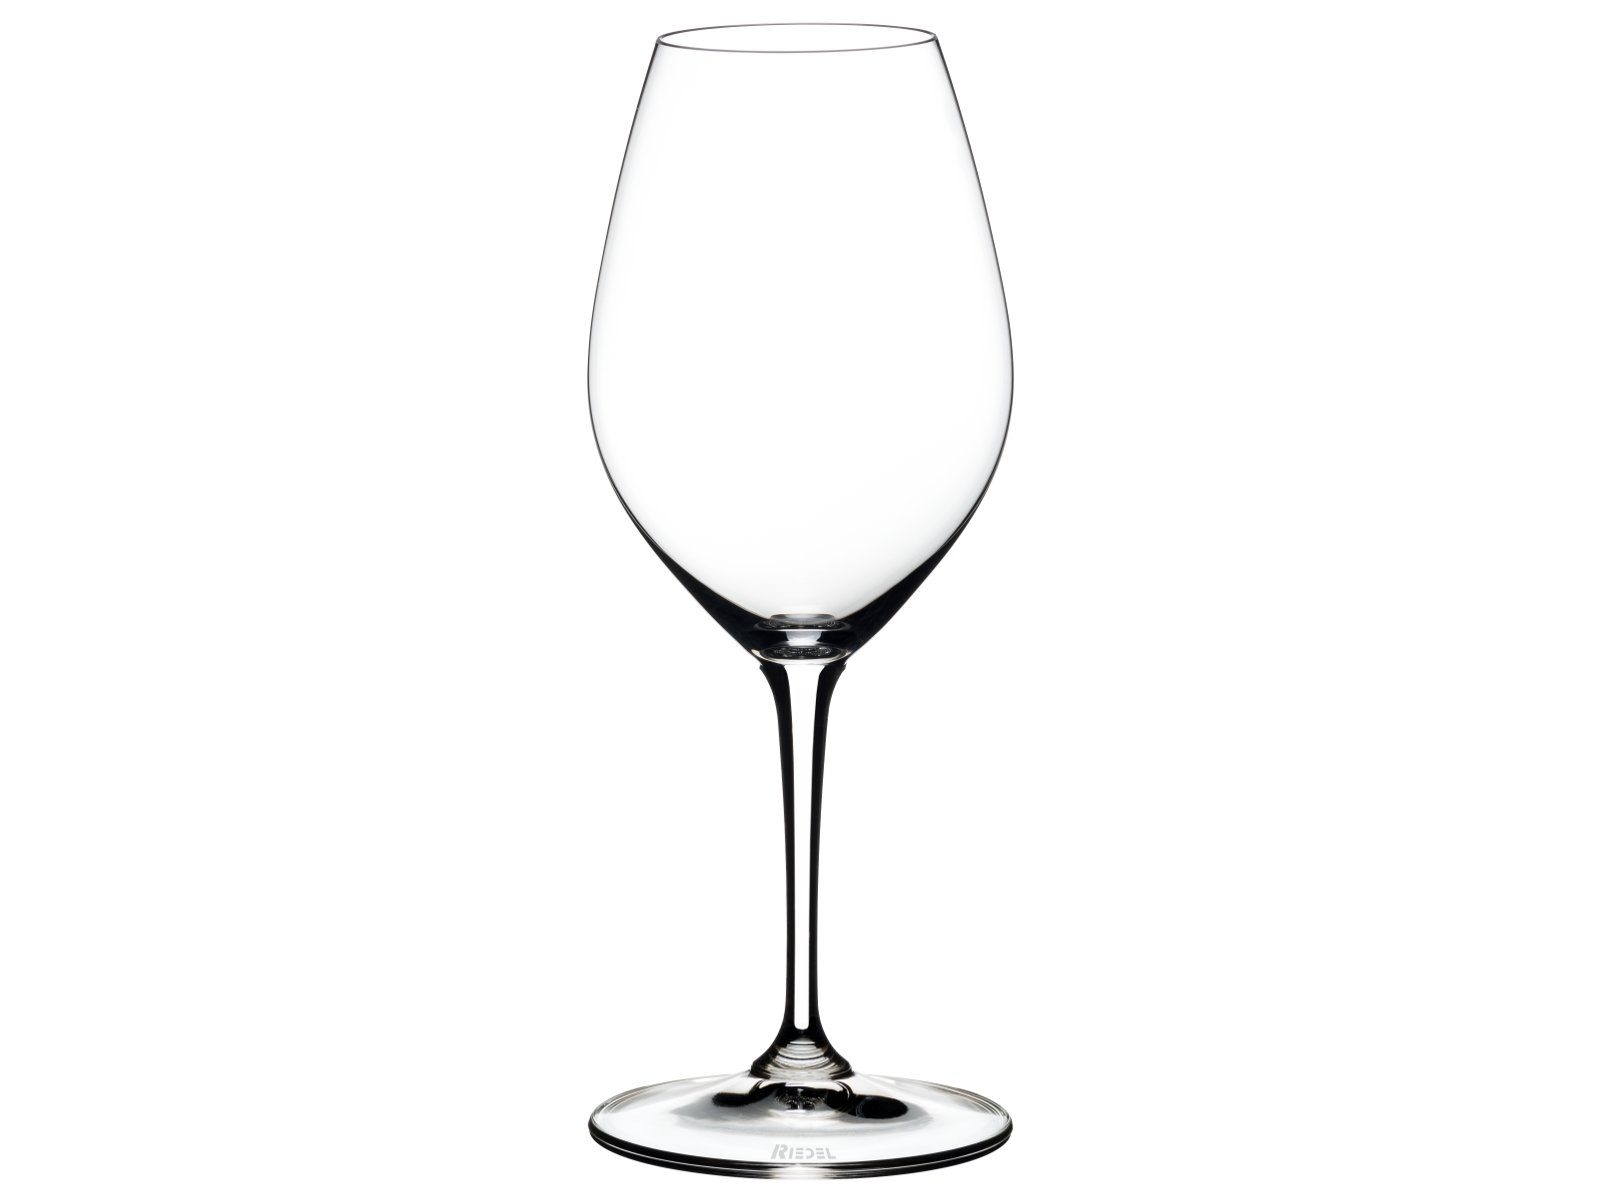 RIEDEL THE WINE GLASS COMPANY Sektglas Vinum Champagne Wine Glass 265 Jahre Set6, Kristallglas